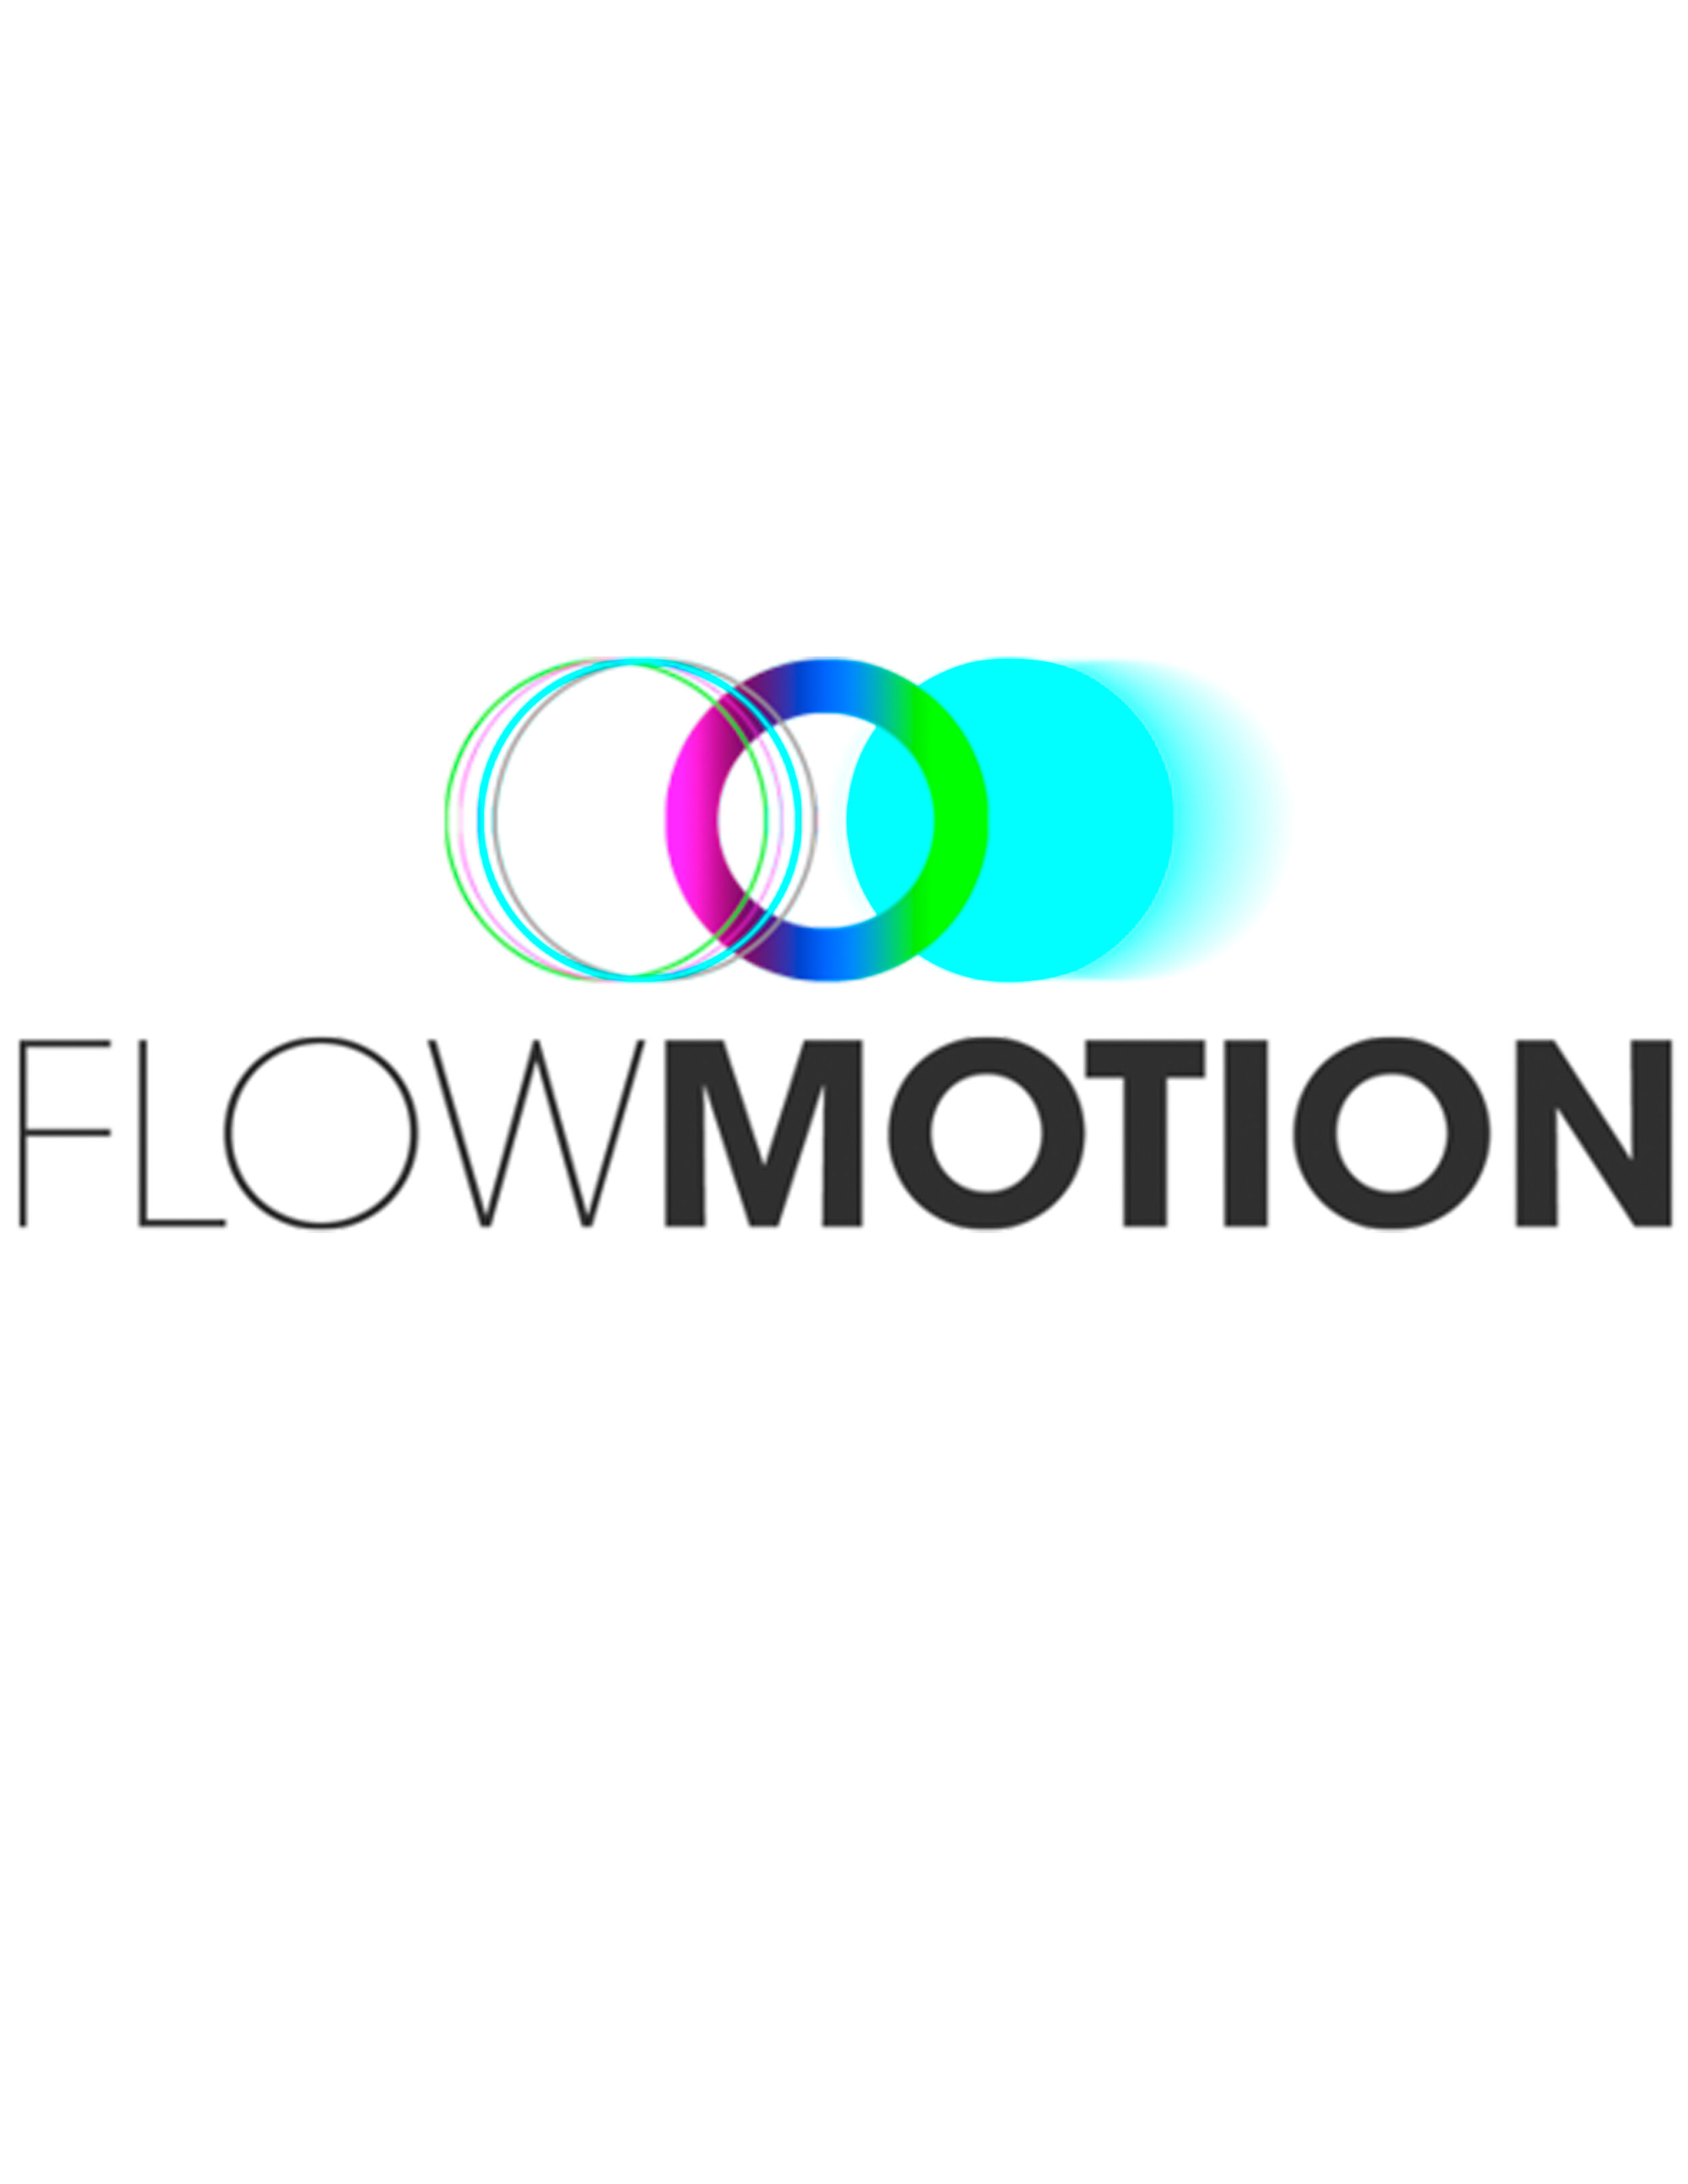 Flow Motio Logo.jpg